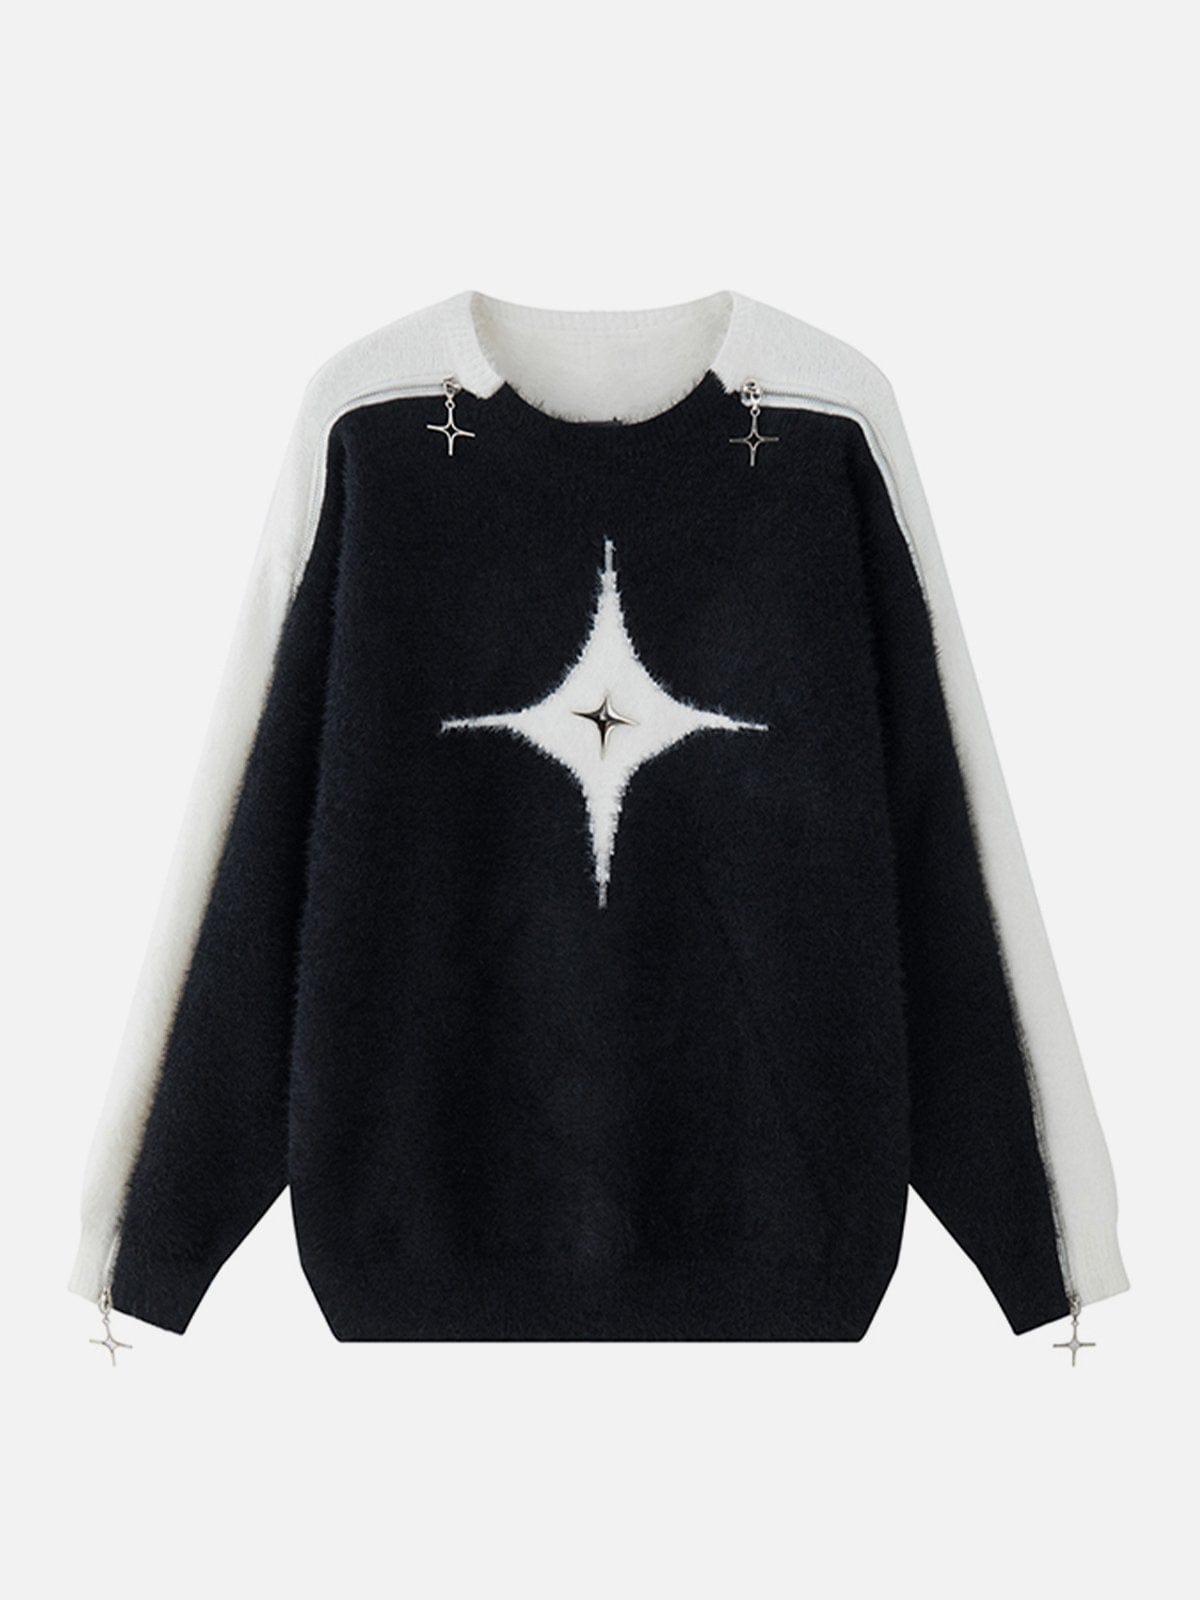 NEV Deconstruct Multiple Zippers Star Sweater